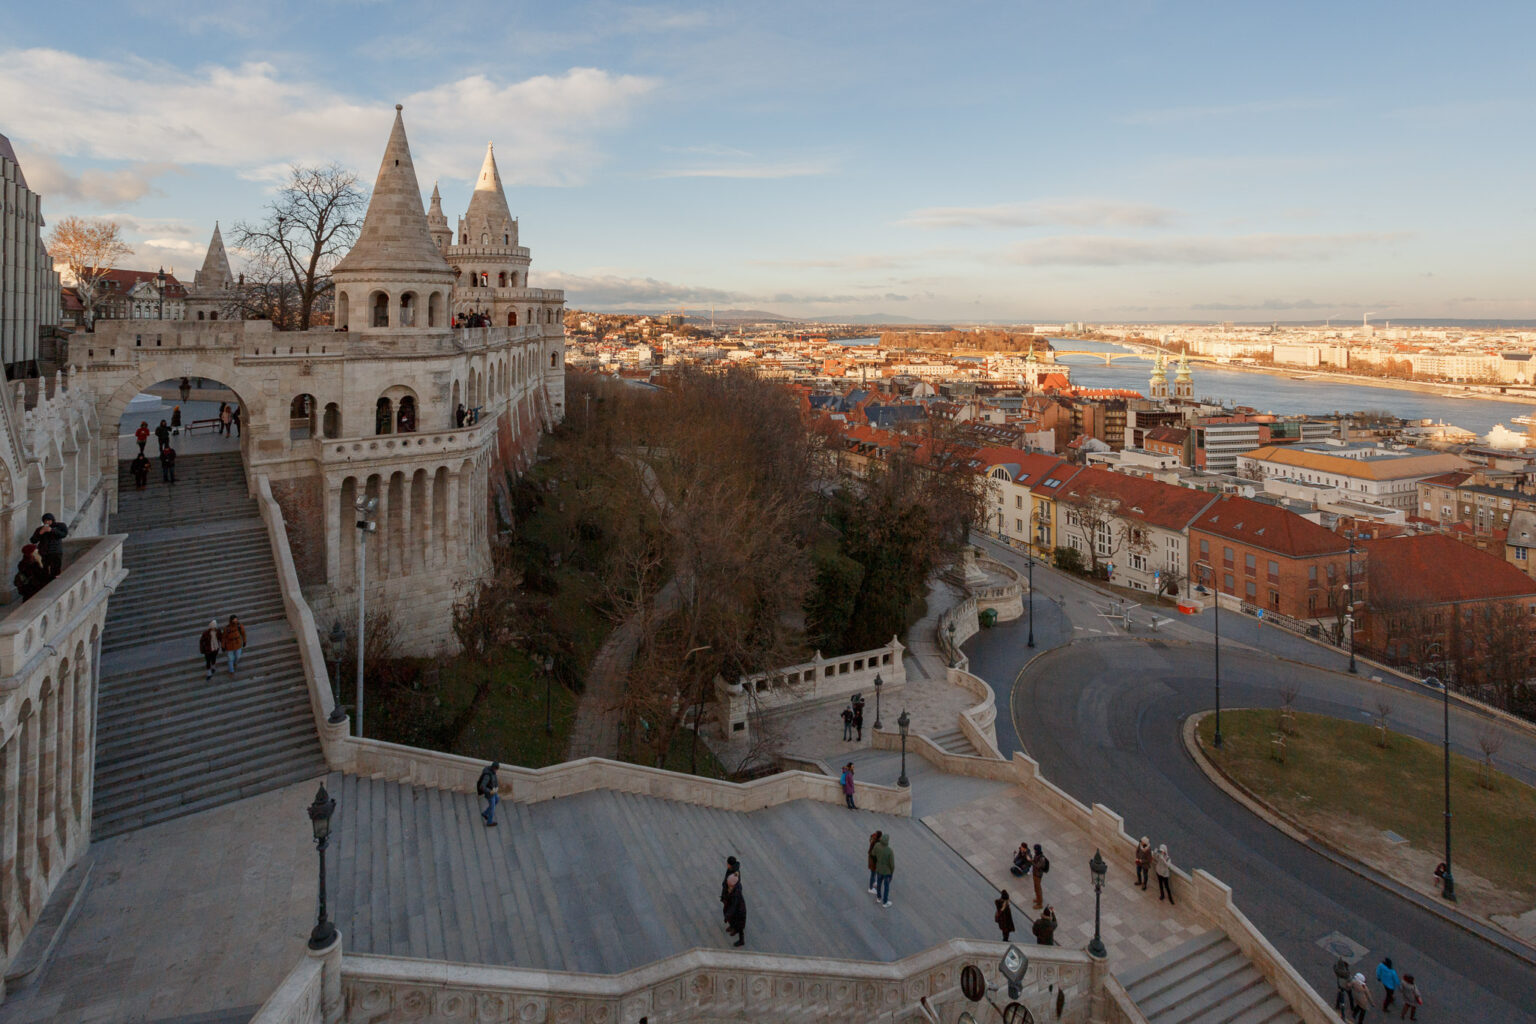 Budapest Buda Castle